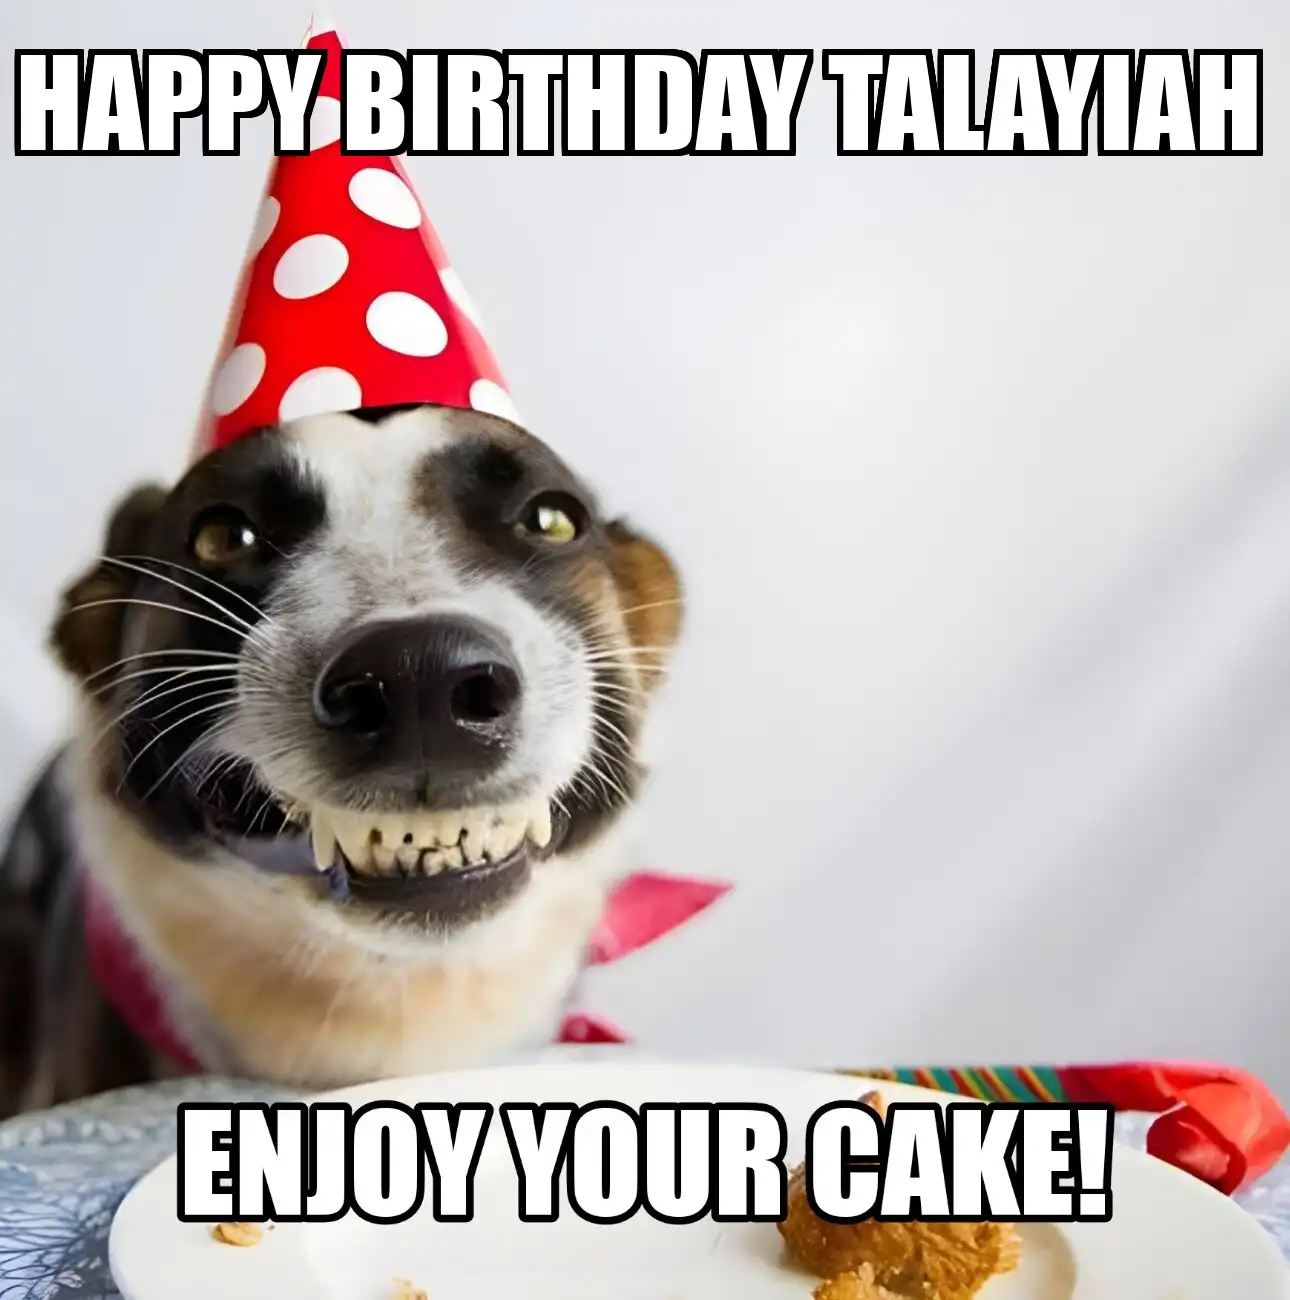 Happy Birthday Talayiah Enjoy Your Cake Dog Meme